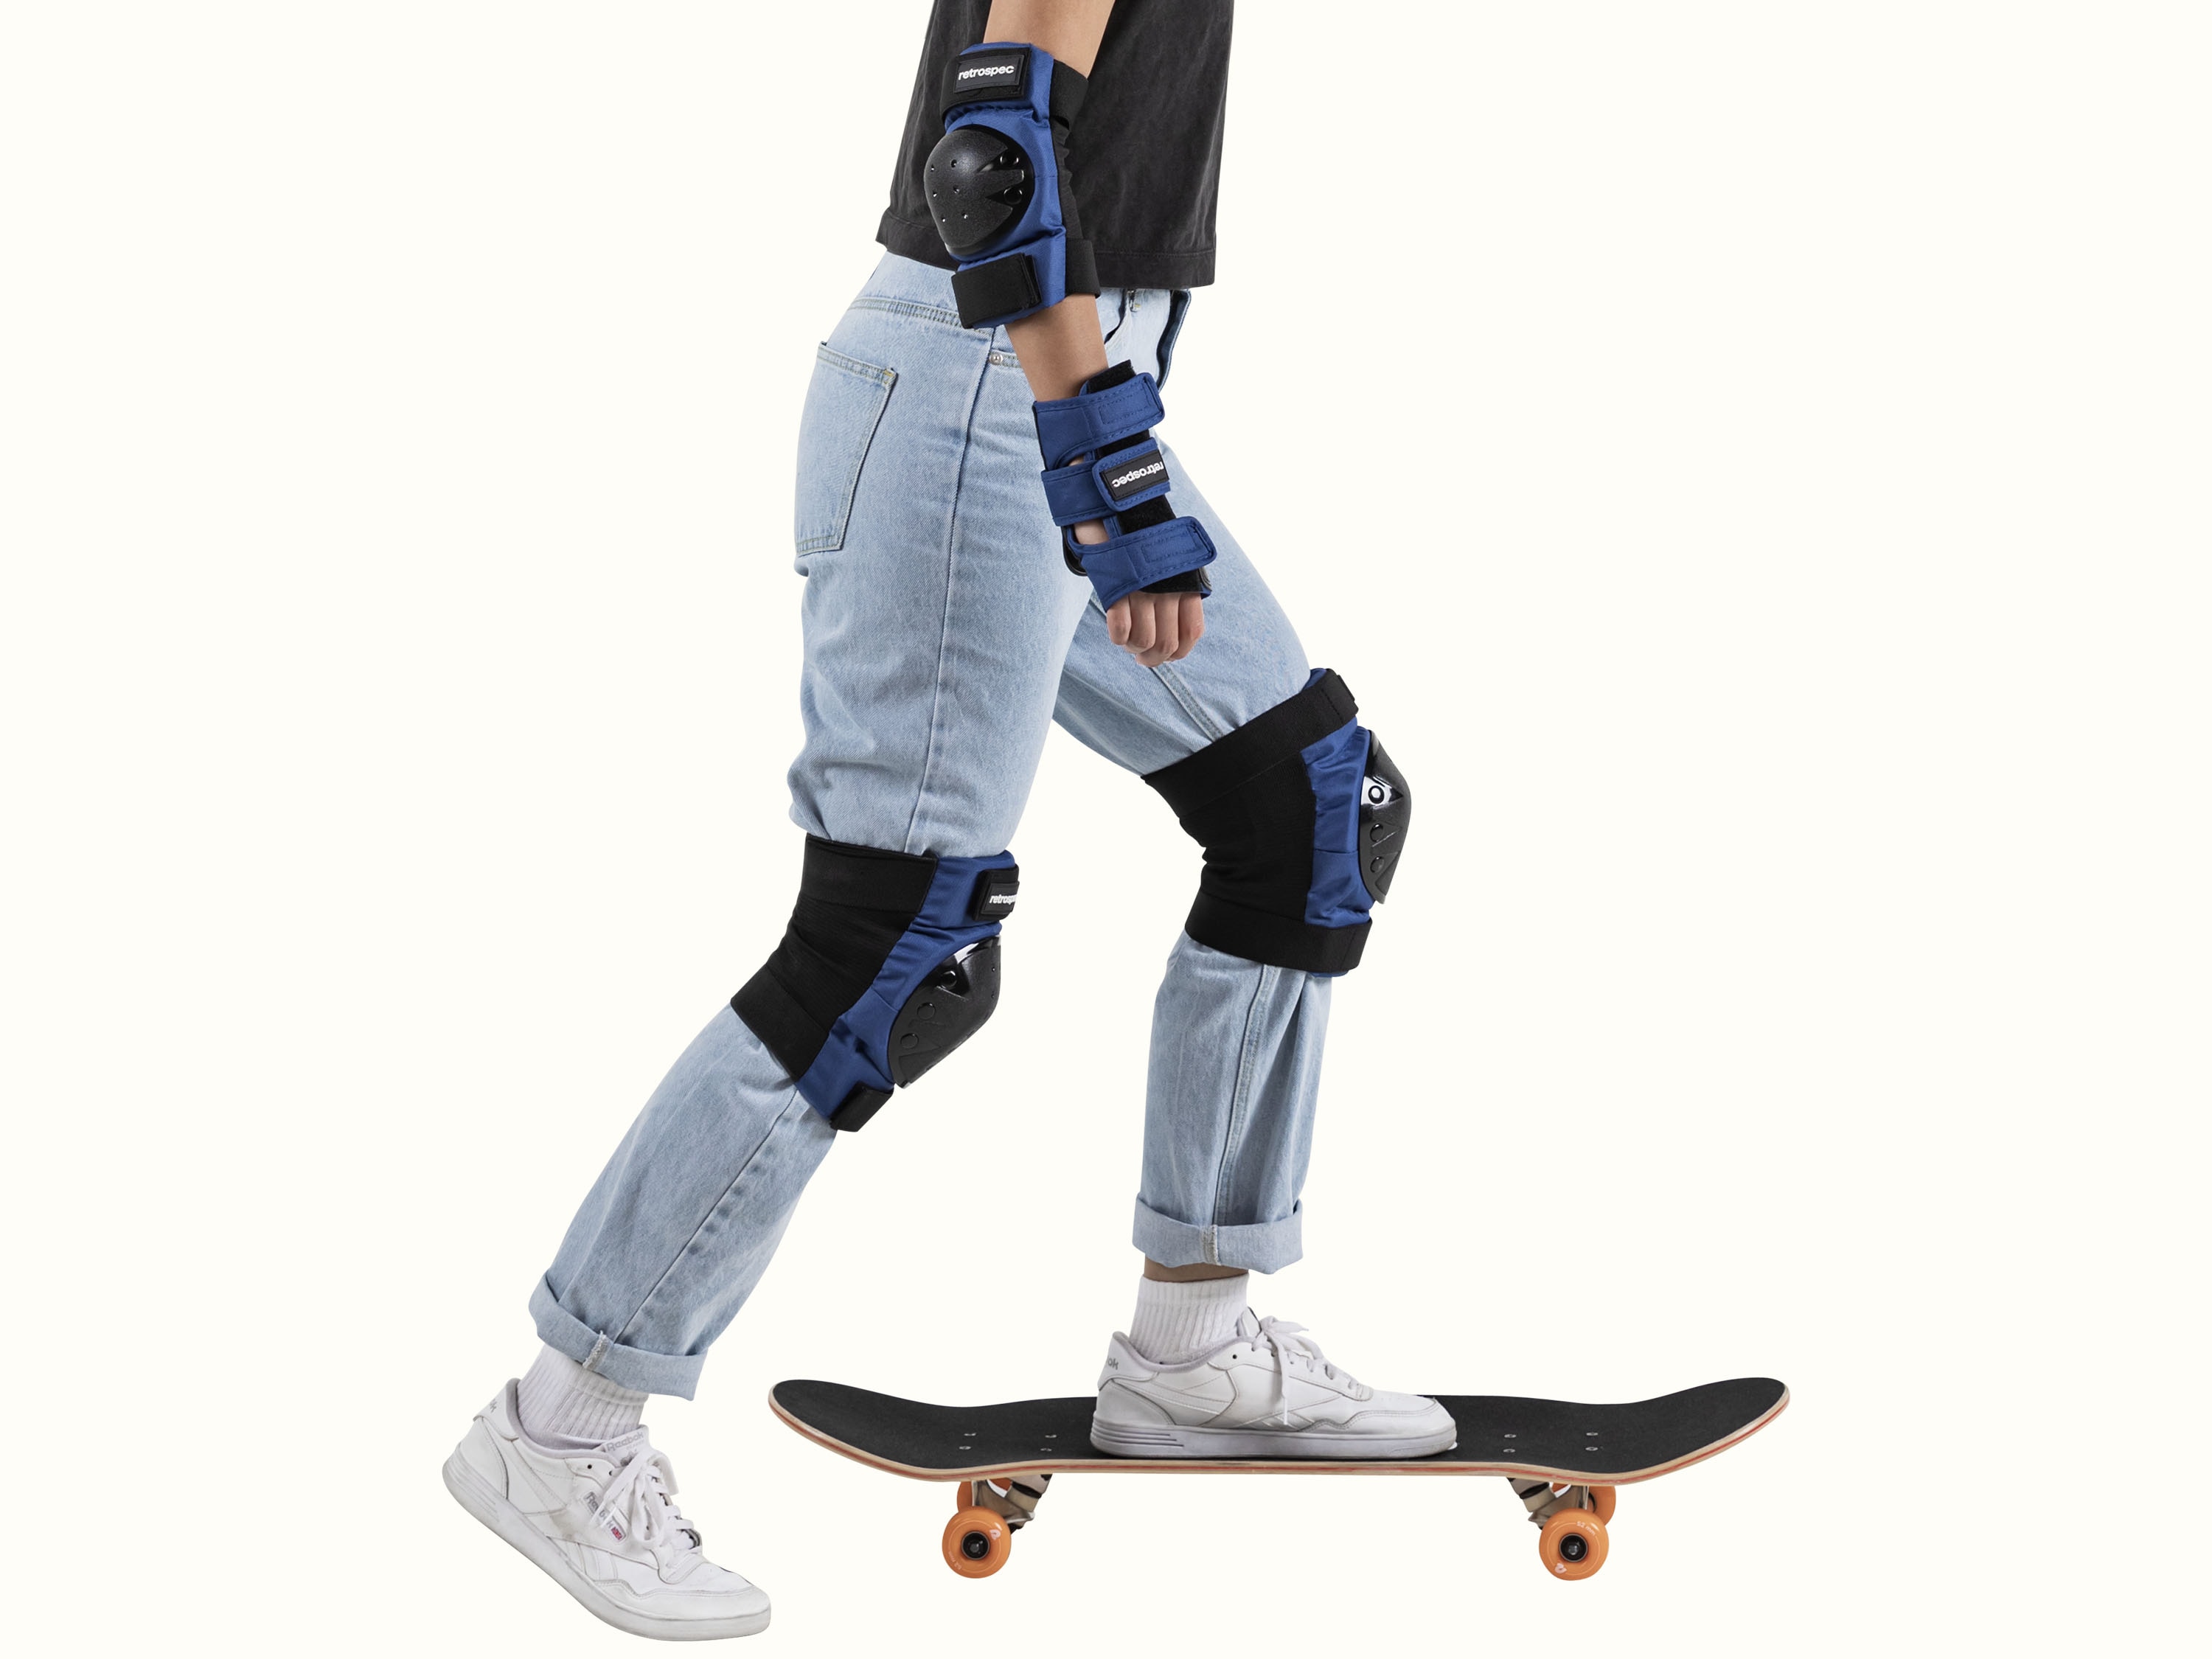  Retrospec Knee Pads, Elbow Pads & Wrist Guards for Men, Women  & Kids - Protective Gear for Skateboarding, Roller Skate, Rollerblade, BMX  & Scooter - Multi Sport Pad Set 